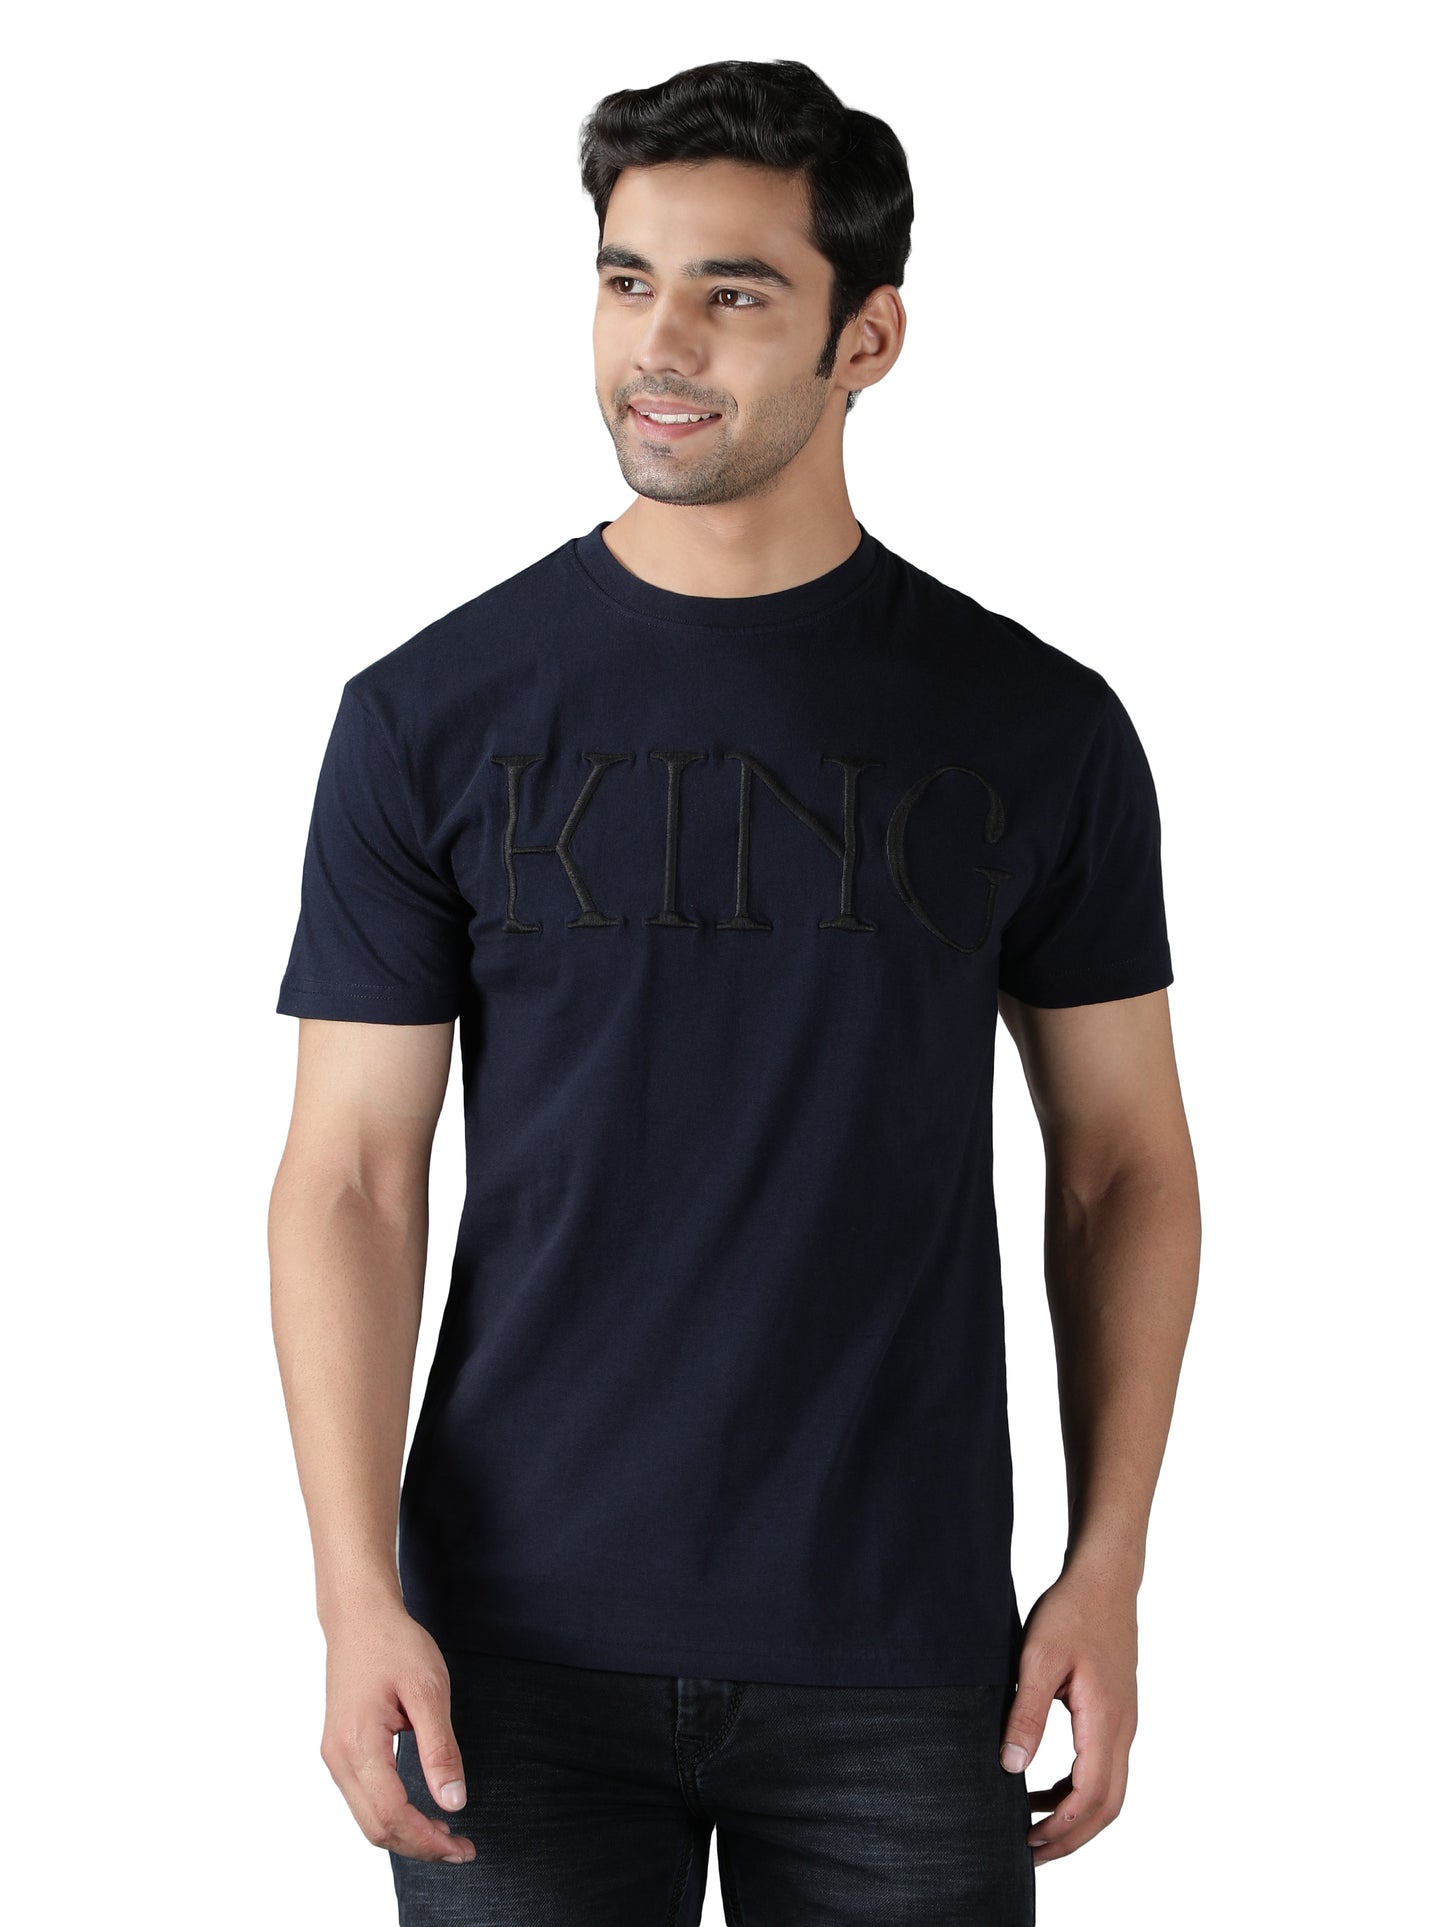 NUEVOSPORTA Men's Cotton Graphic Printed Blue T-Shirt